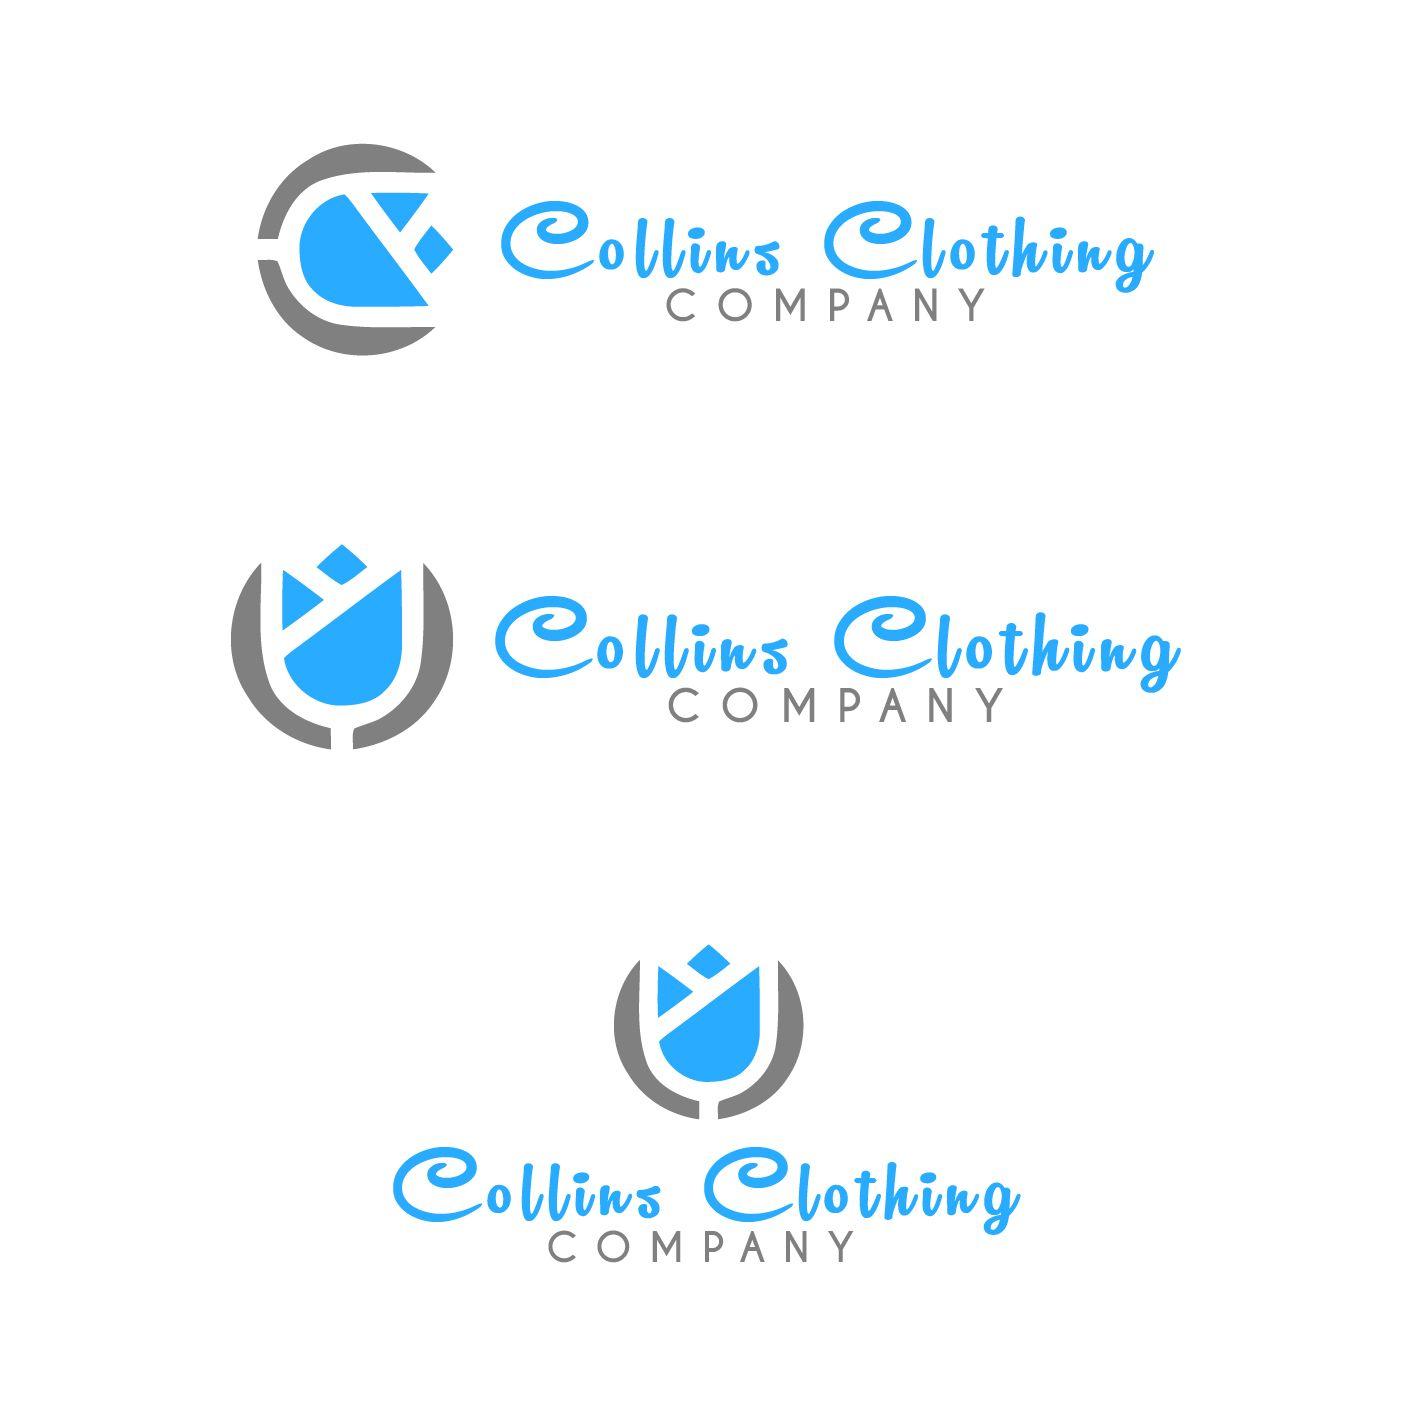 Australian Clothing Company Logo - Elegant, Modern, Clothing Logo Design for Collins Clothing Company ...